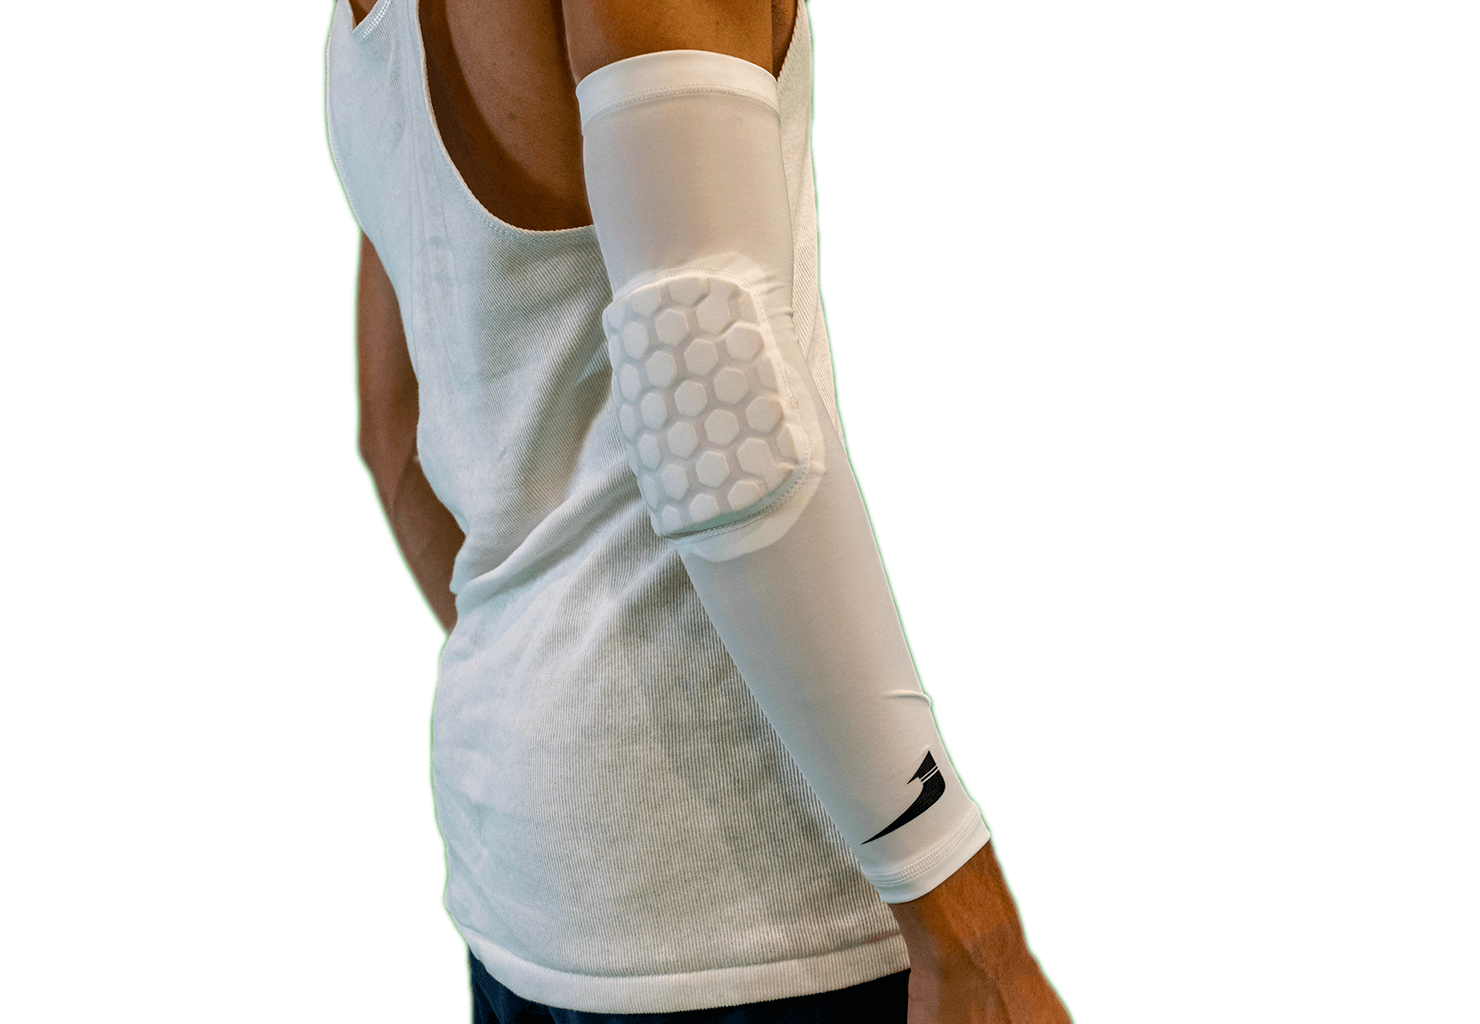 padded arm sleeve football